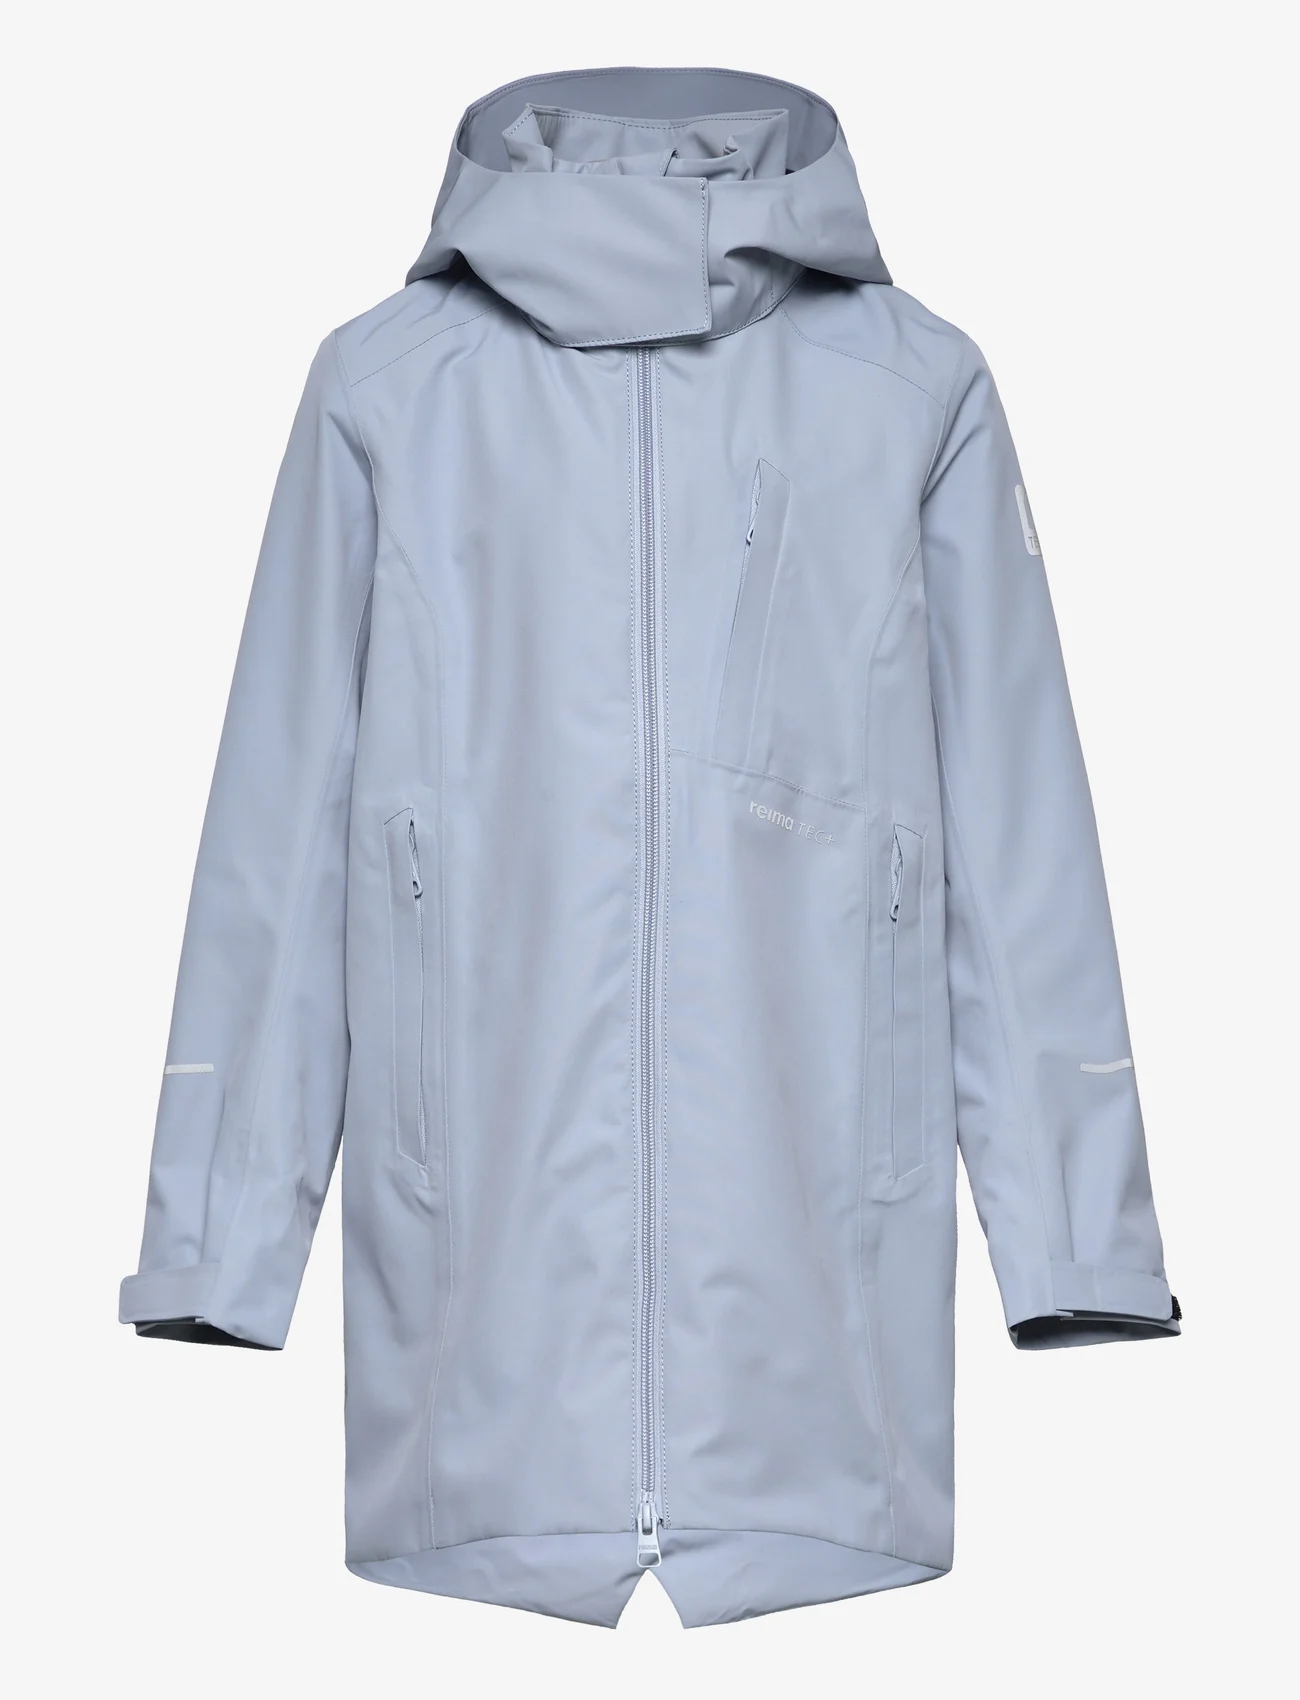 Reima - Reimatec jacket, Muutun - regnjackor - foggy blue - 0